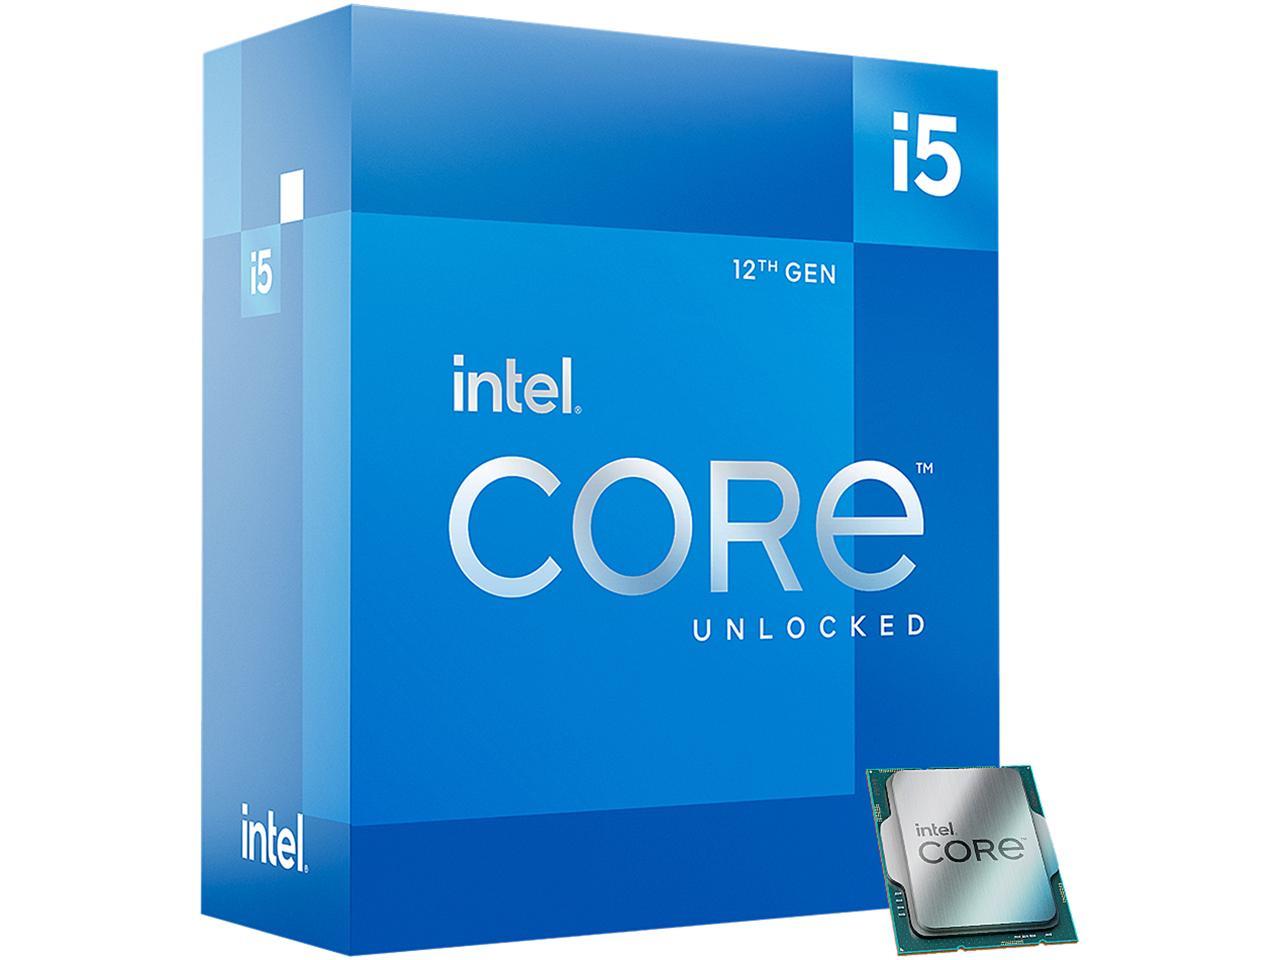 Intel Core i5-12600K Desktop Processor $180 + Free Shipping